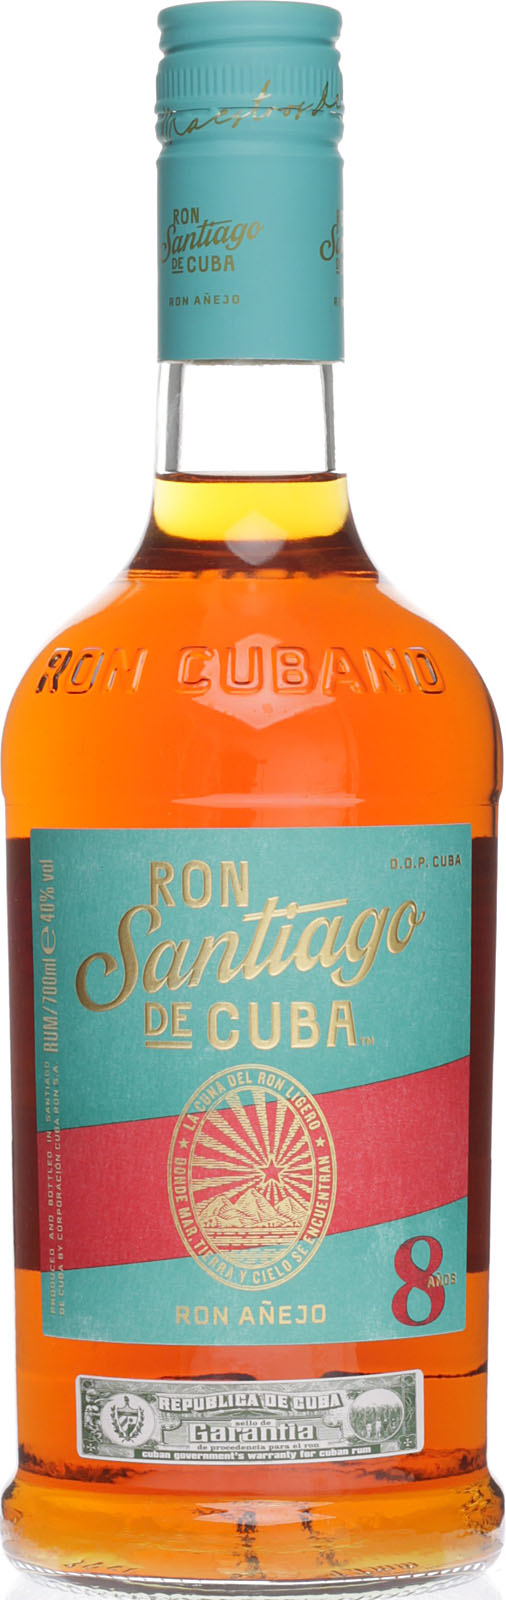 de Santiago Shop im Anejo Ron Tradicion Jahre Cuba 8